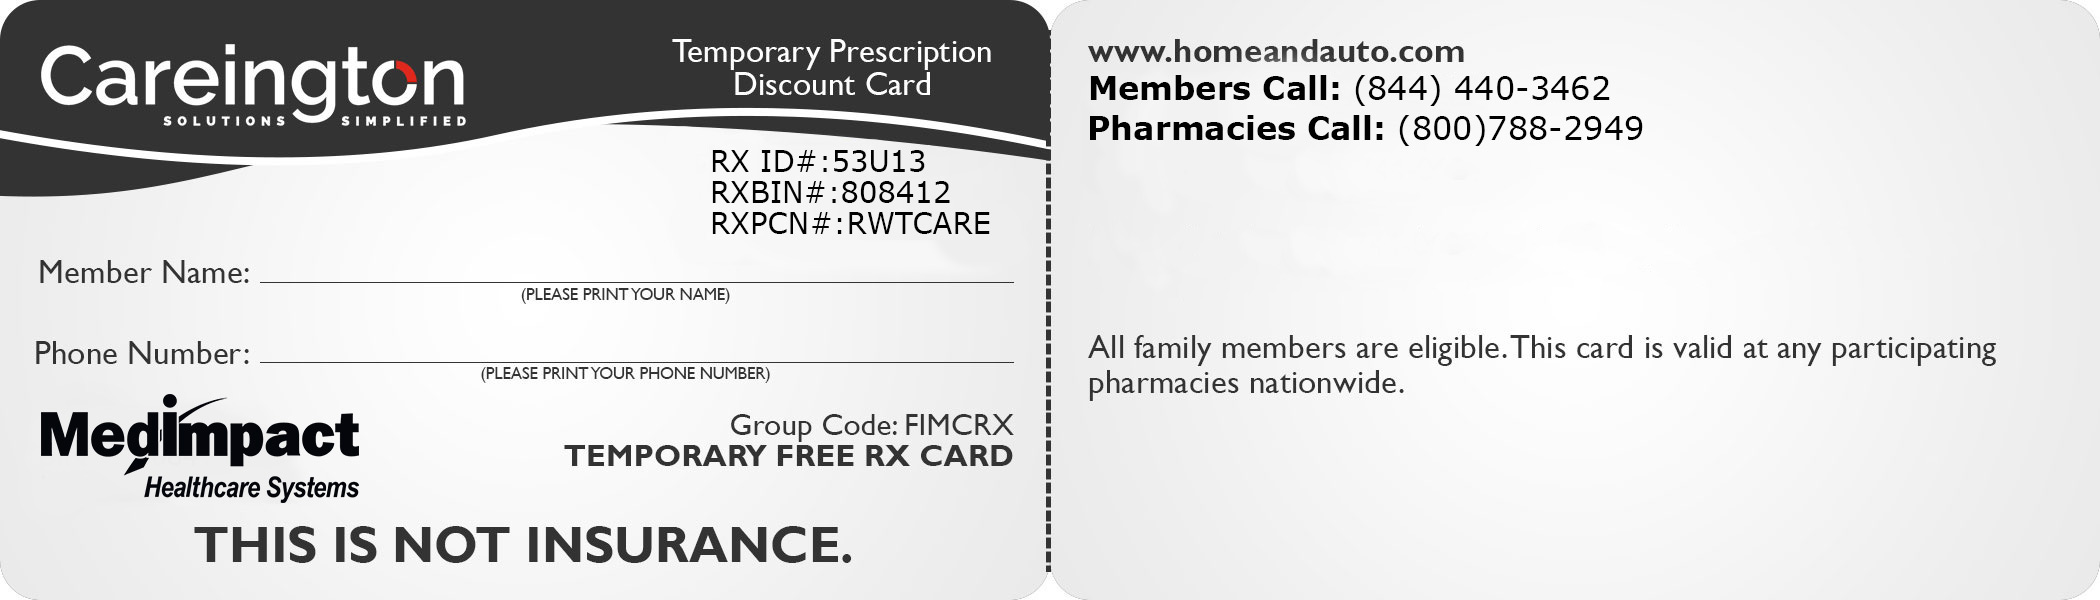 Temporary Prescription Discount Card